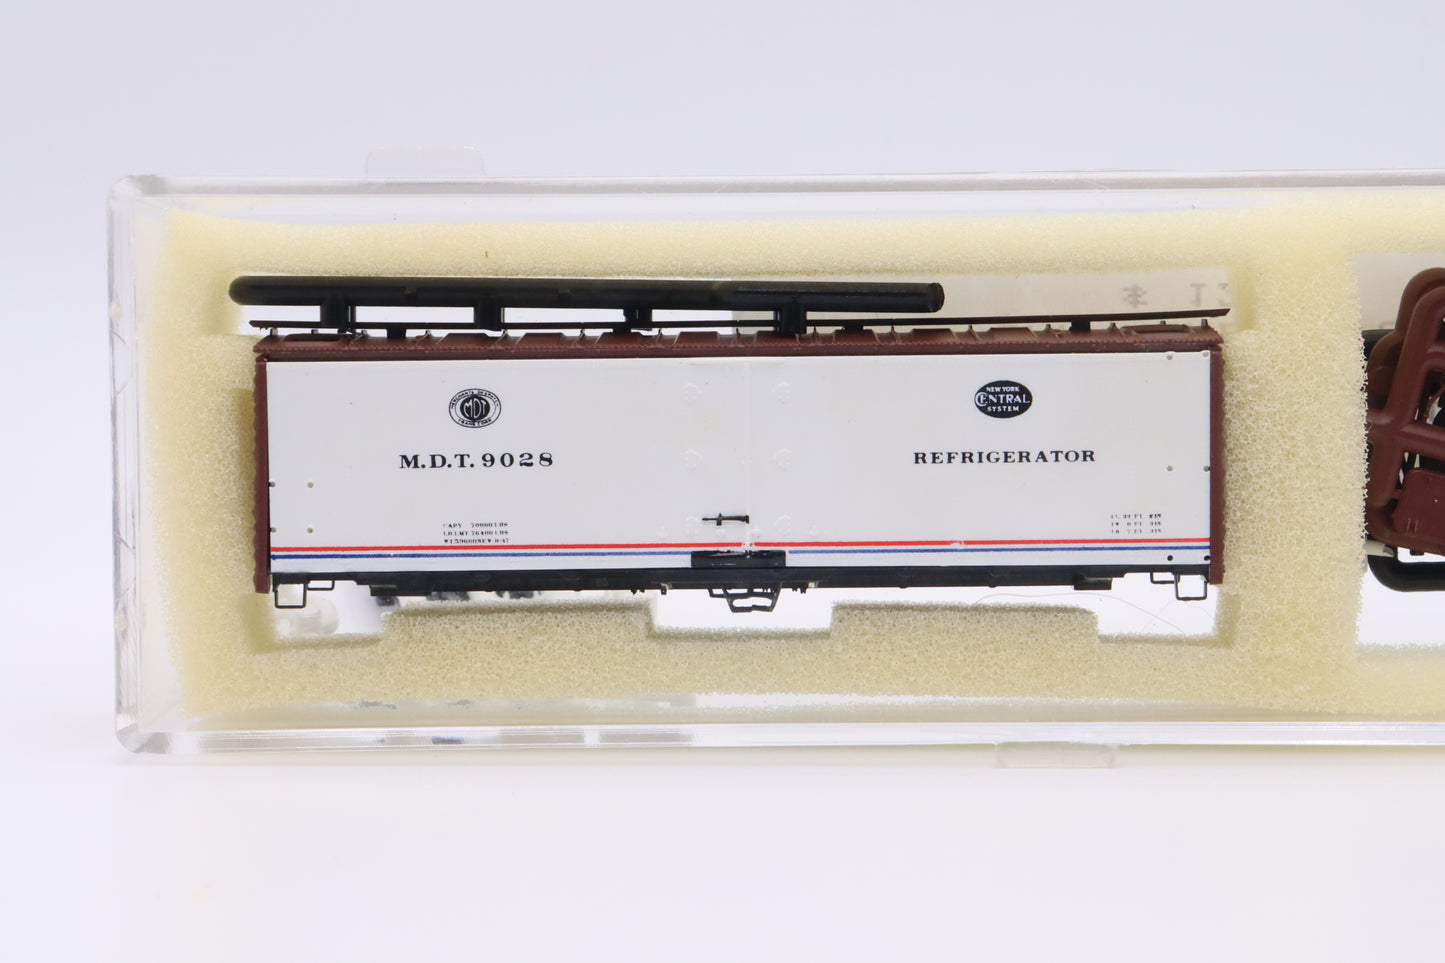 IMR-60504-02 - R-40-23 Steel Sided Ice Bunker Reefer Car Kit - New York Central - MDT-9028